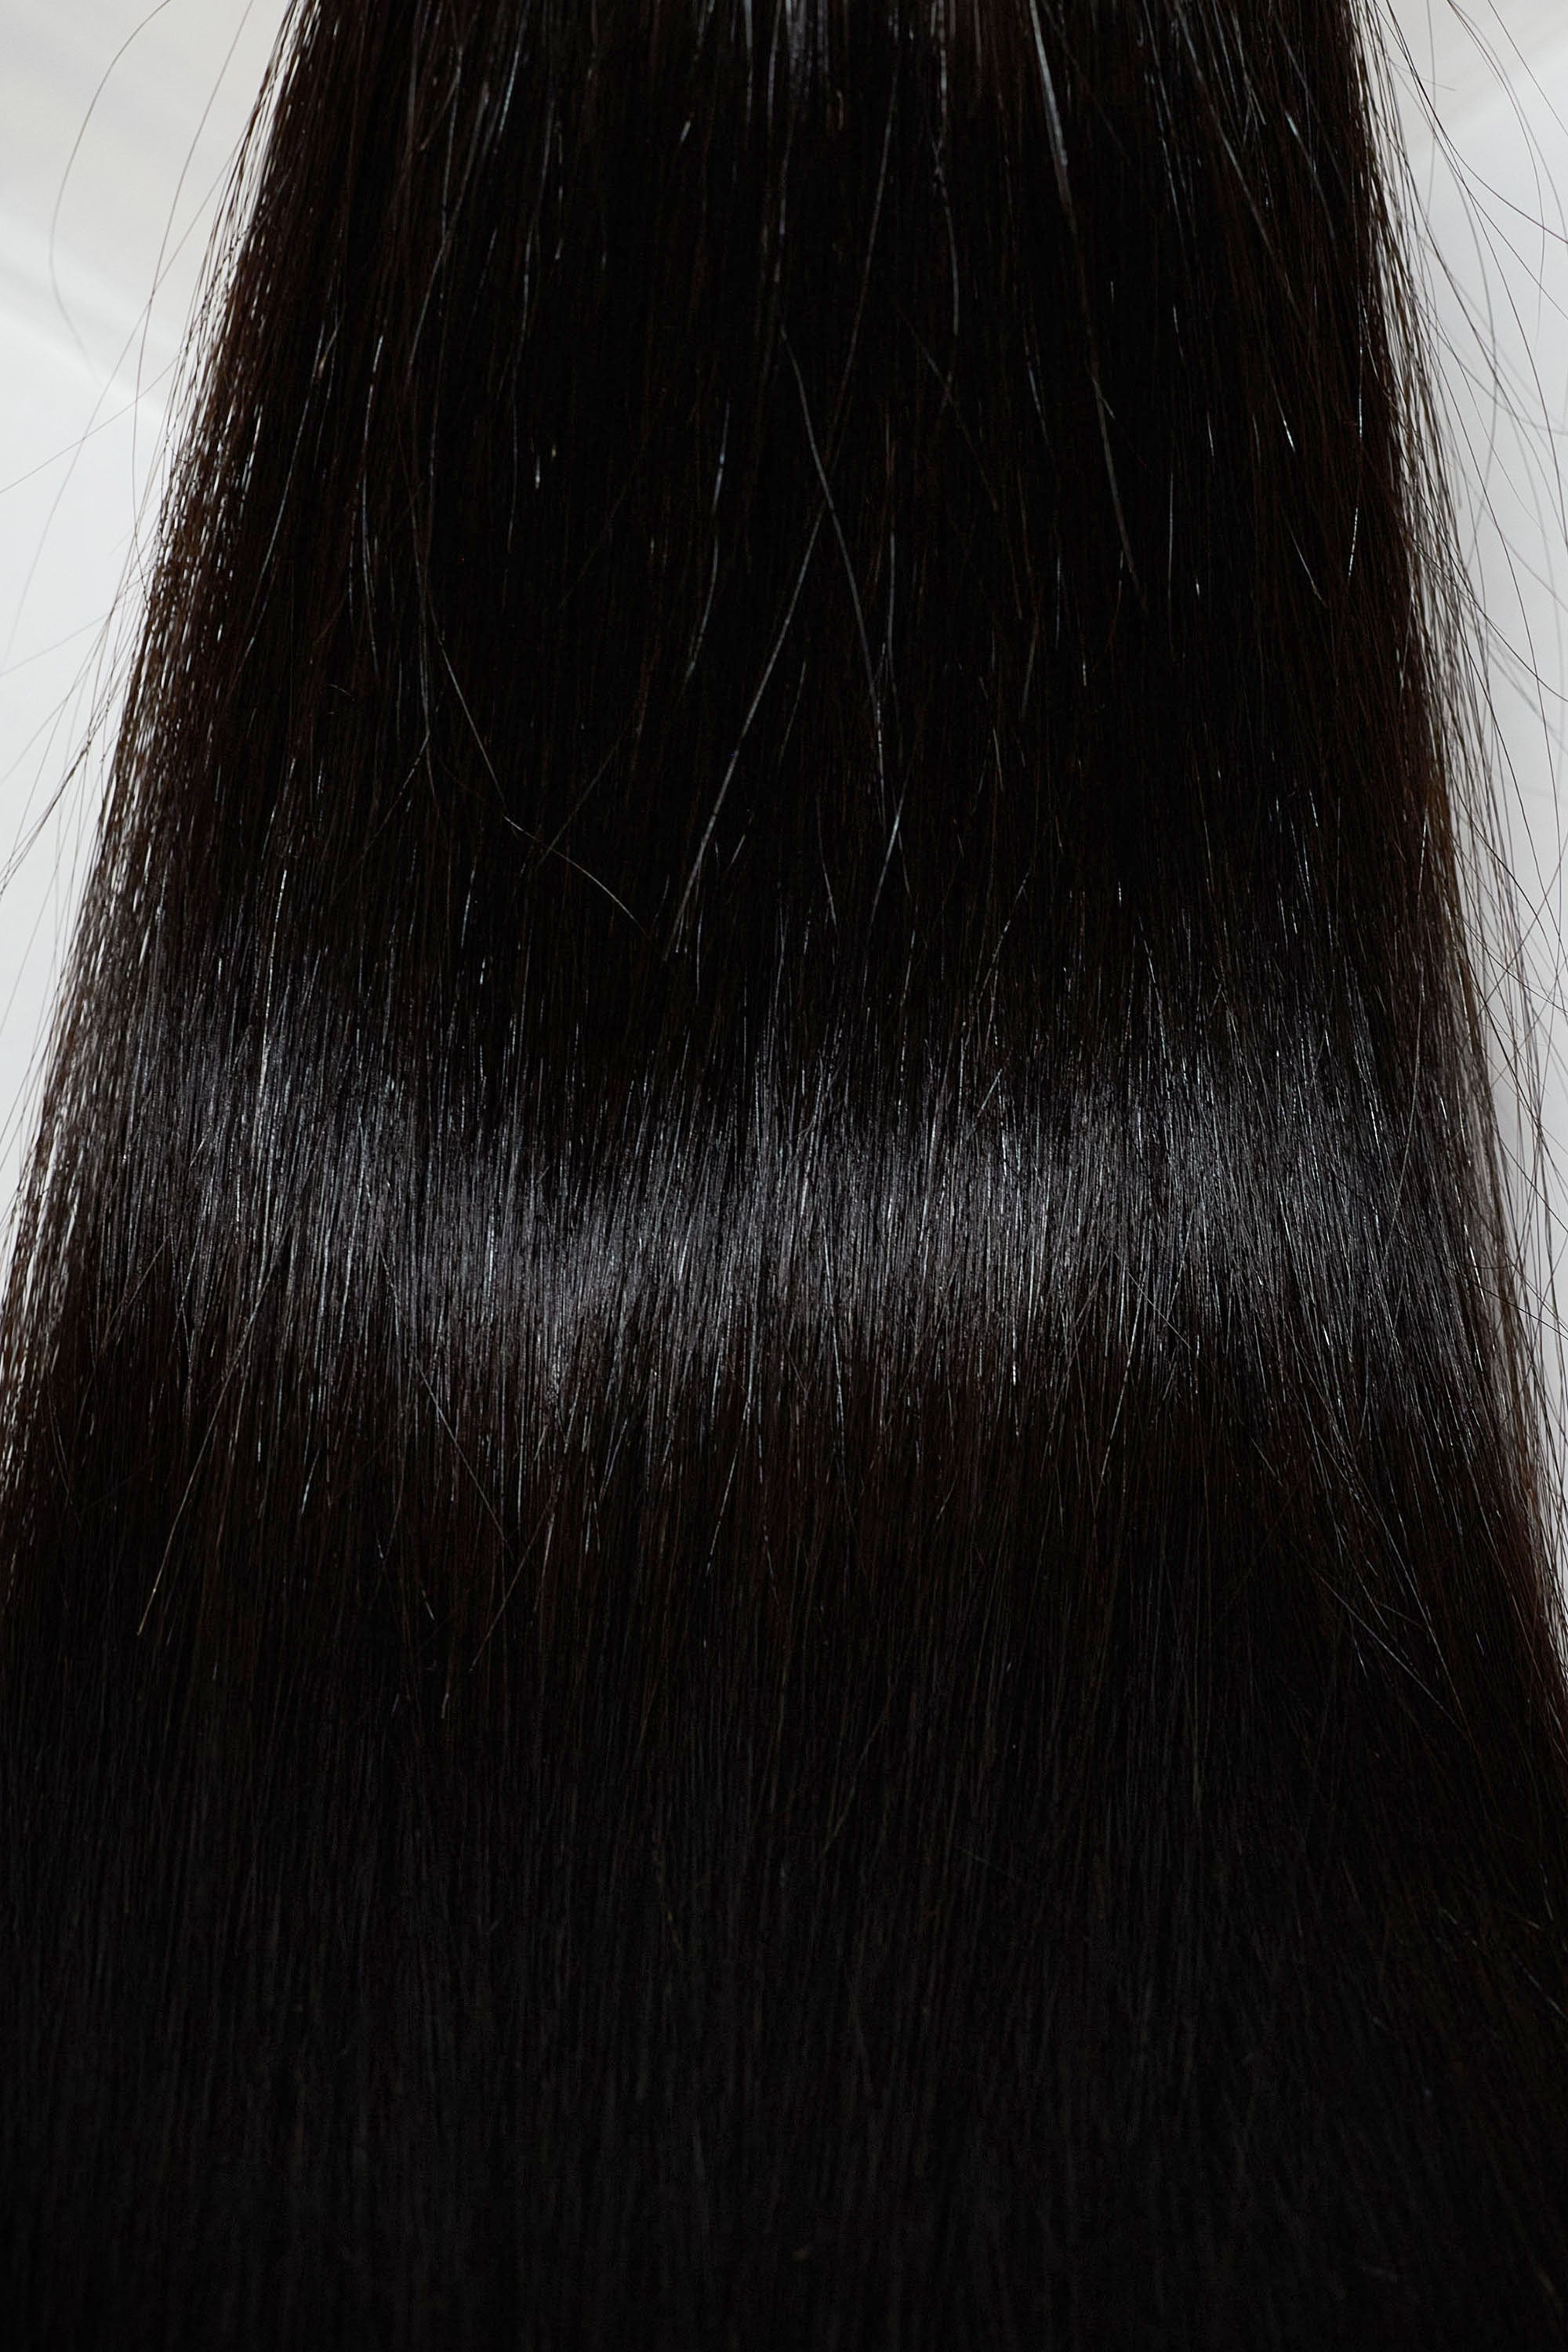 Behair professional Keratin Tip "Premium" 26" (65cm) Natural Straight Jet Black #1 - 25g (Standart - 0.7g each pcs) hair extensions